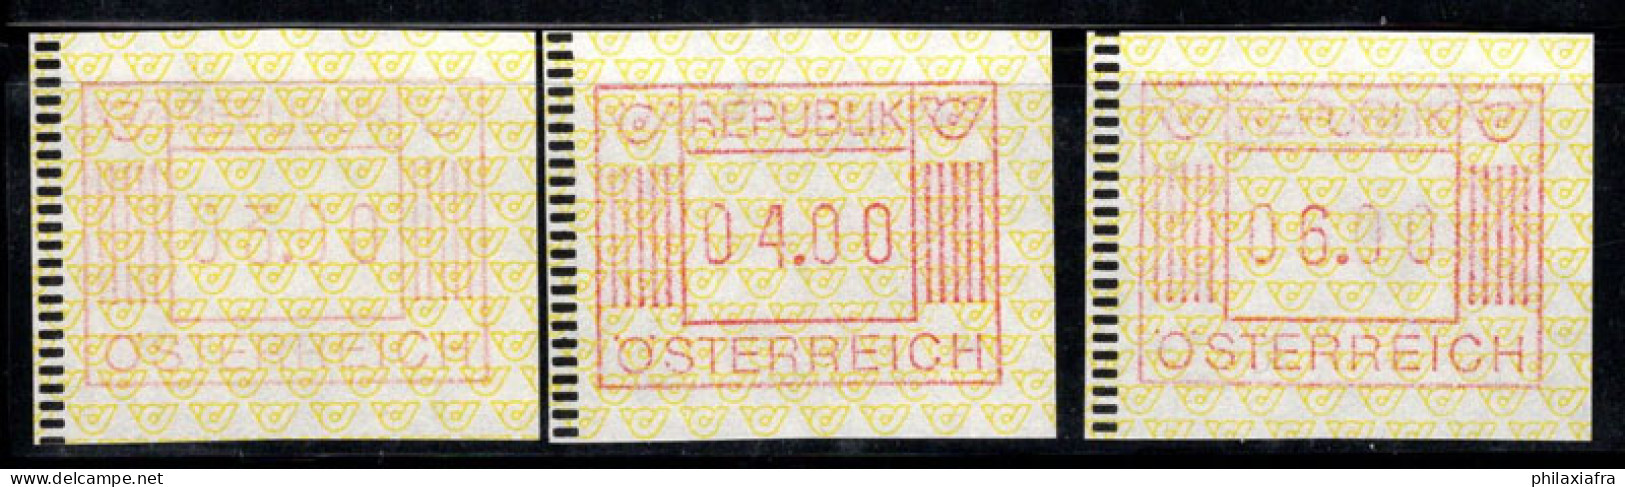 Autriche 1983 Mi. 1 Neuf ** 100% ATM 03.00, 04.00 - Franking Machines (EMA)